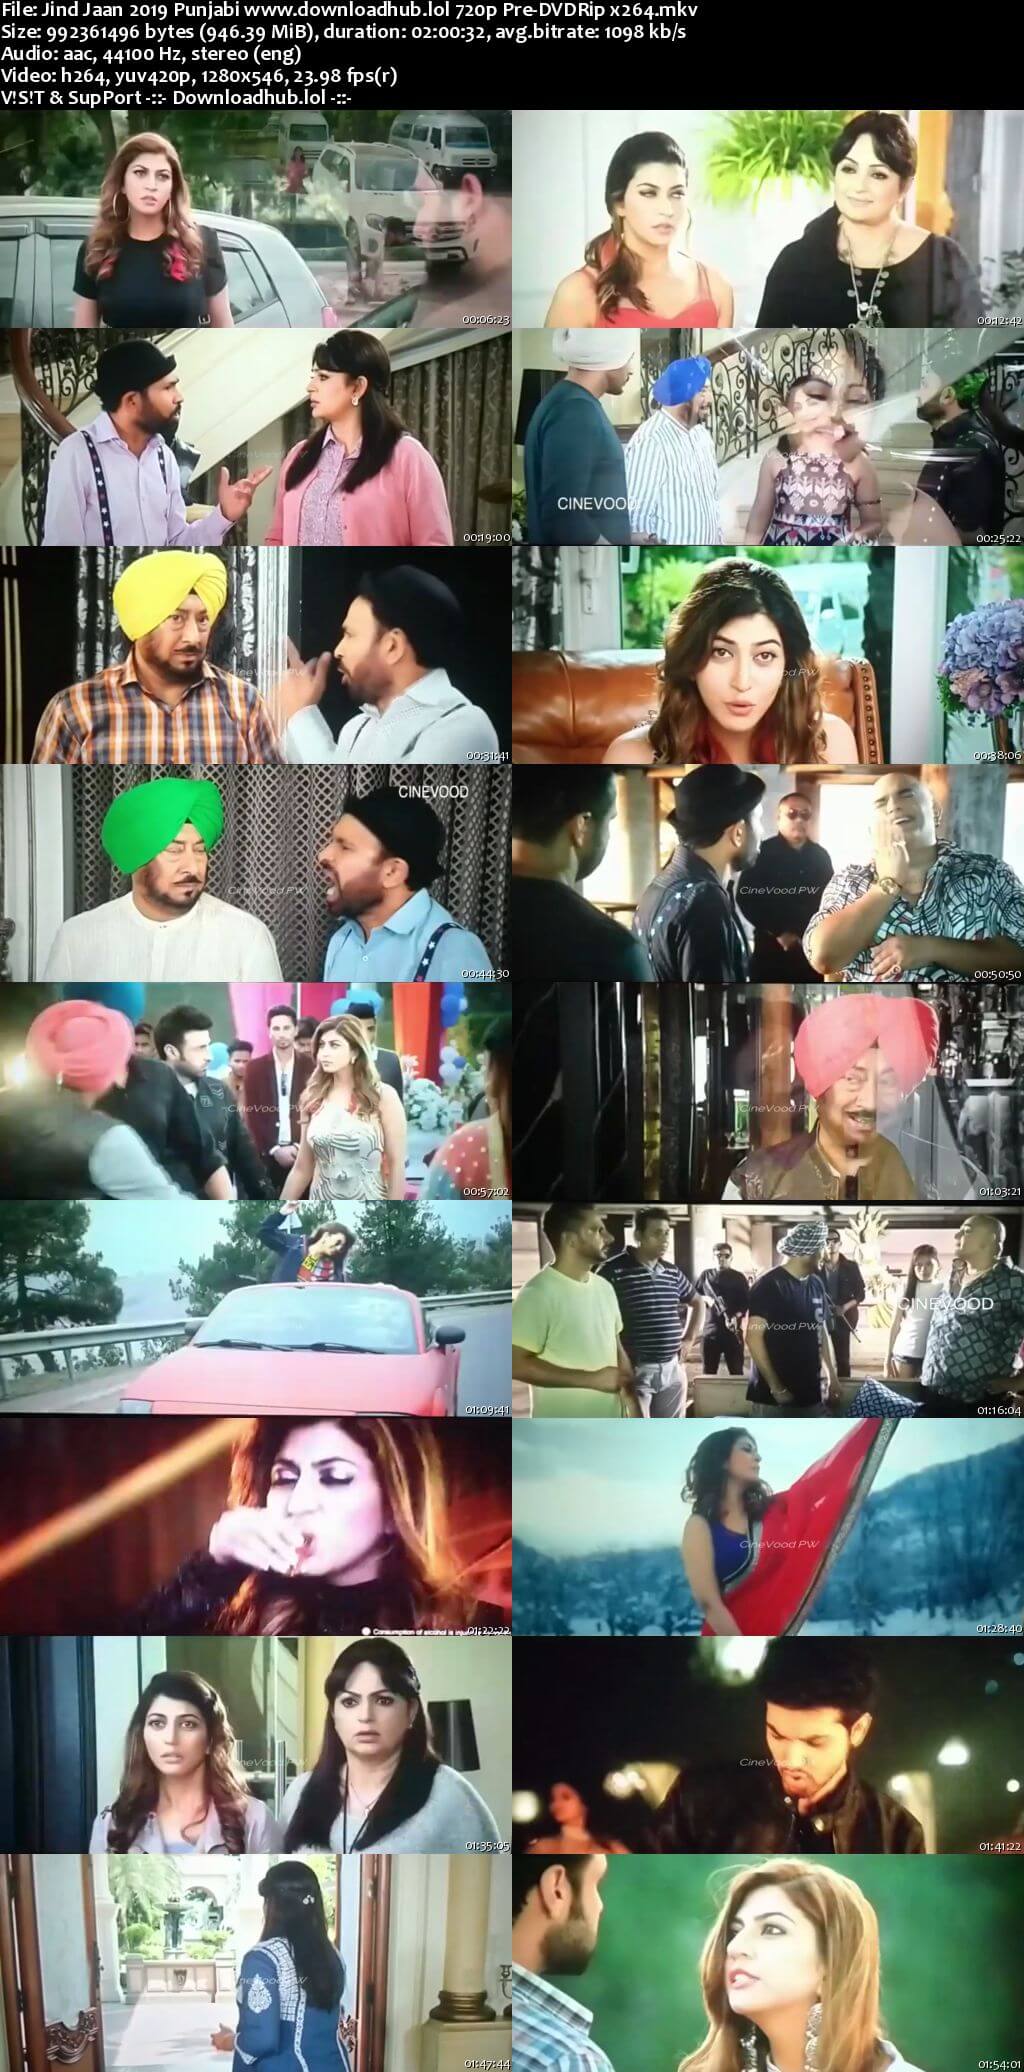 Jind Jaan 2019 Punjabi 720p Pre-DVDRip x264